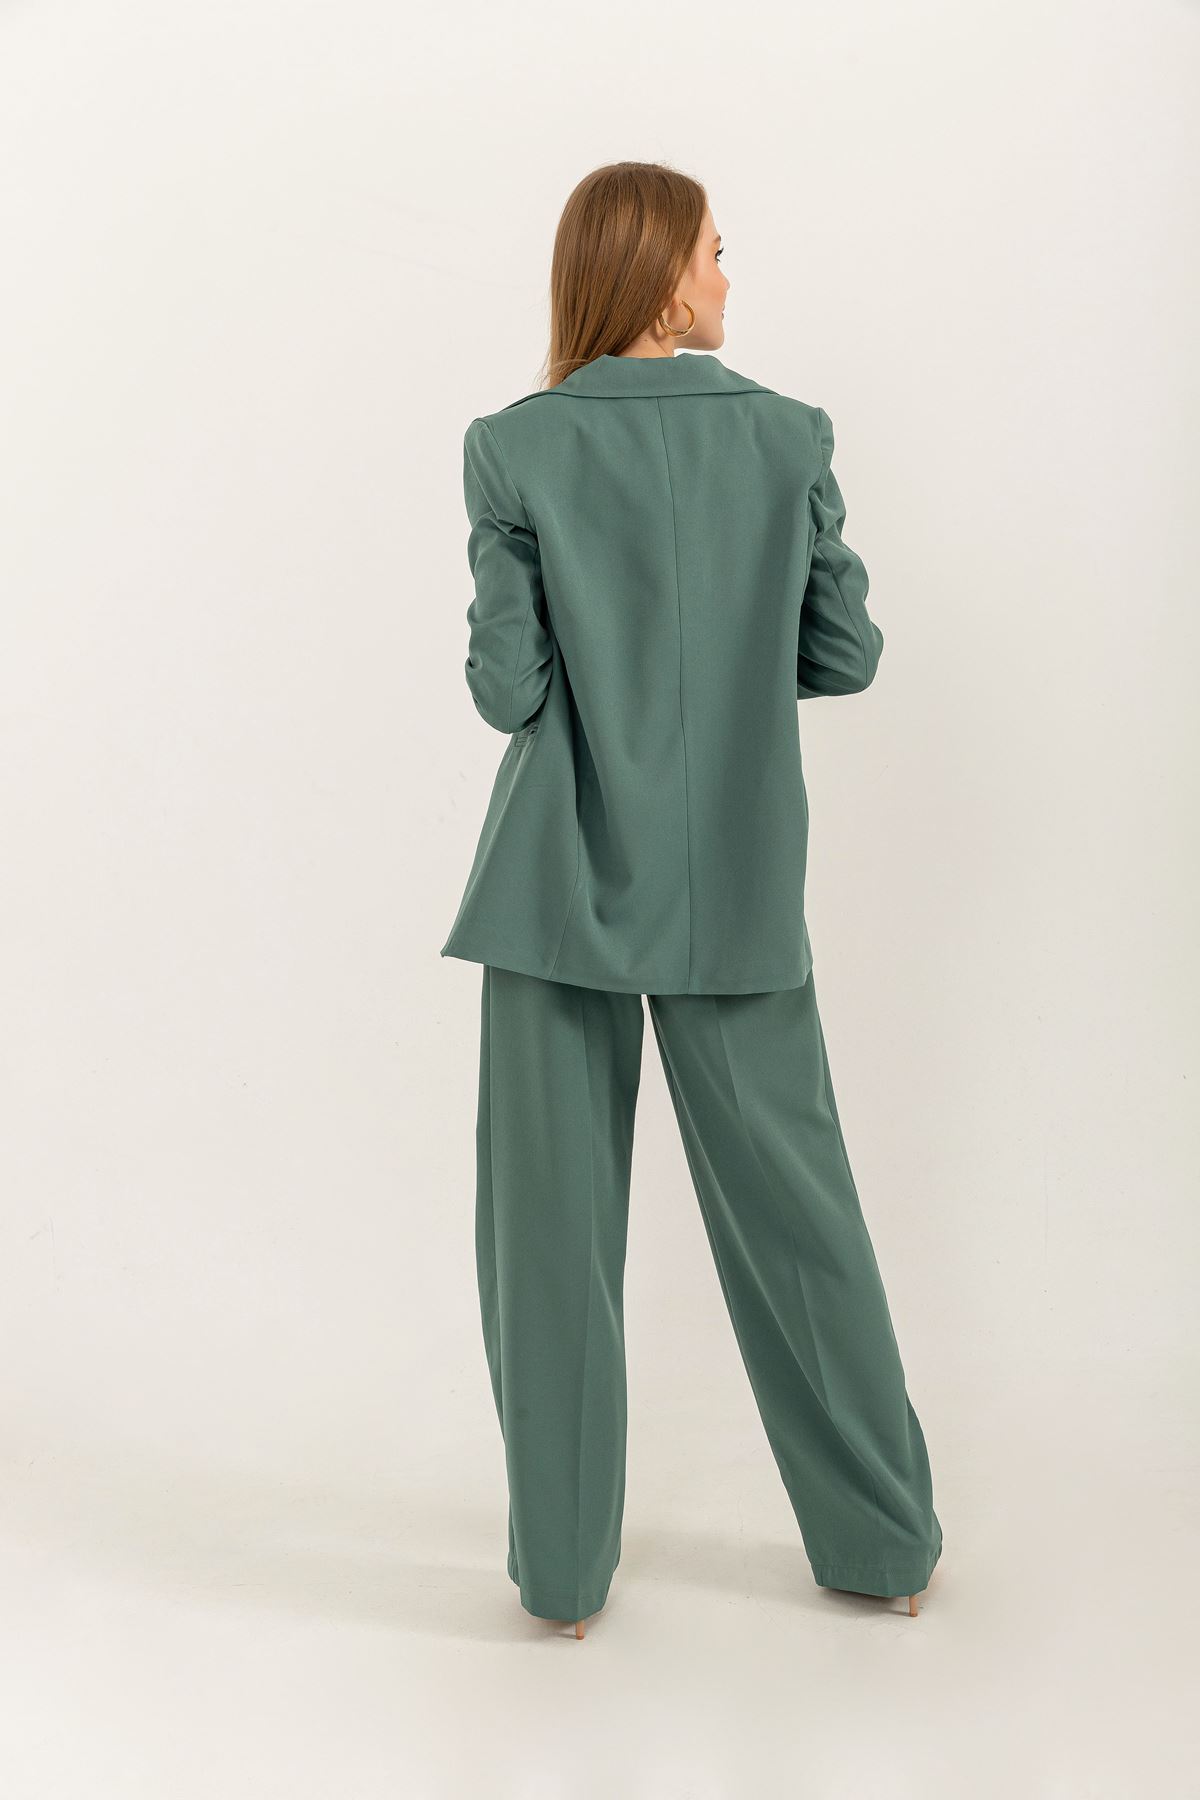 Atlas Fabric Long Sleeve Comfy Women Palazzo Trouser-Mustard Green